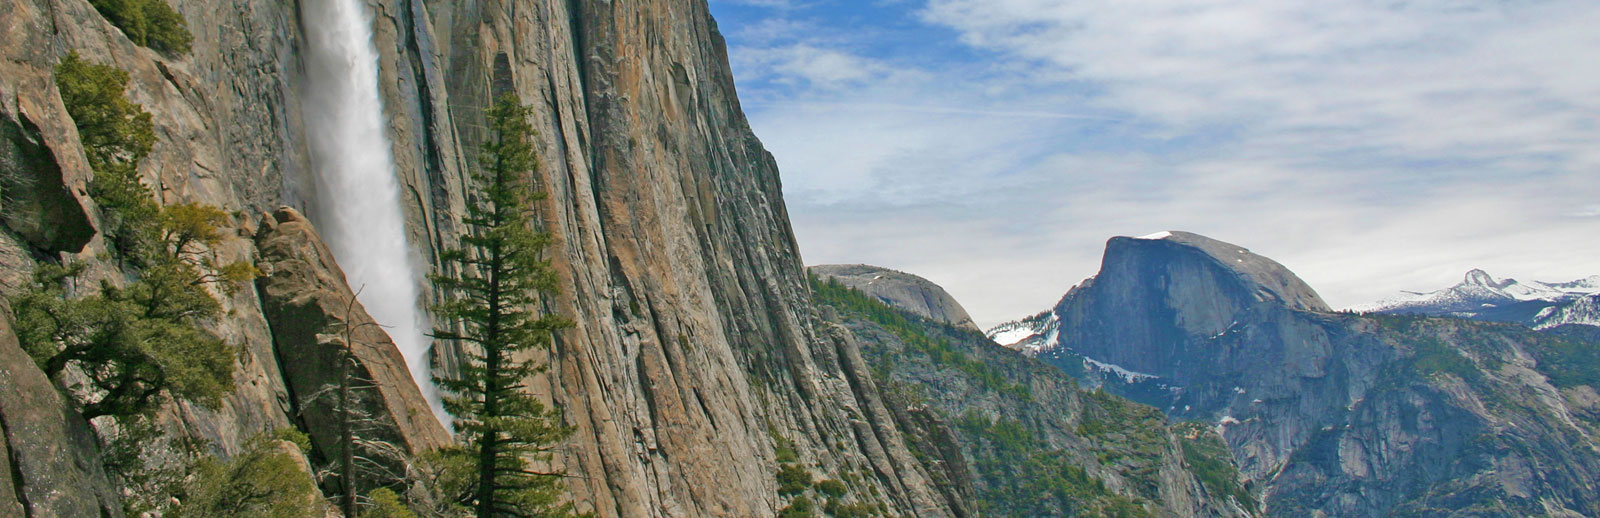 The Yosemite Peregrine Lodge